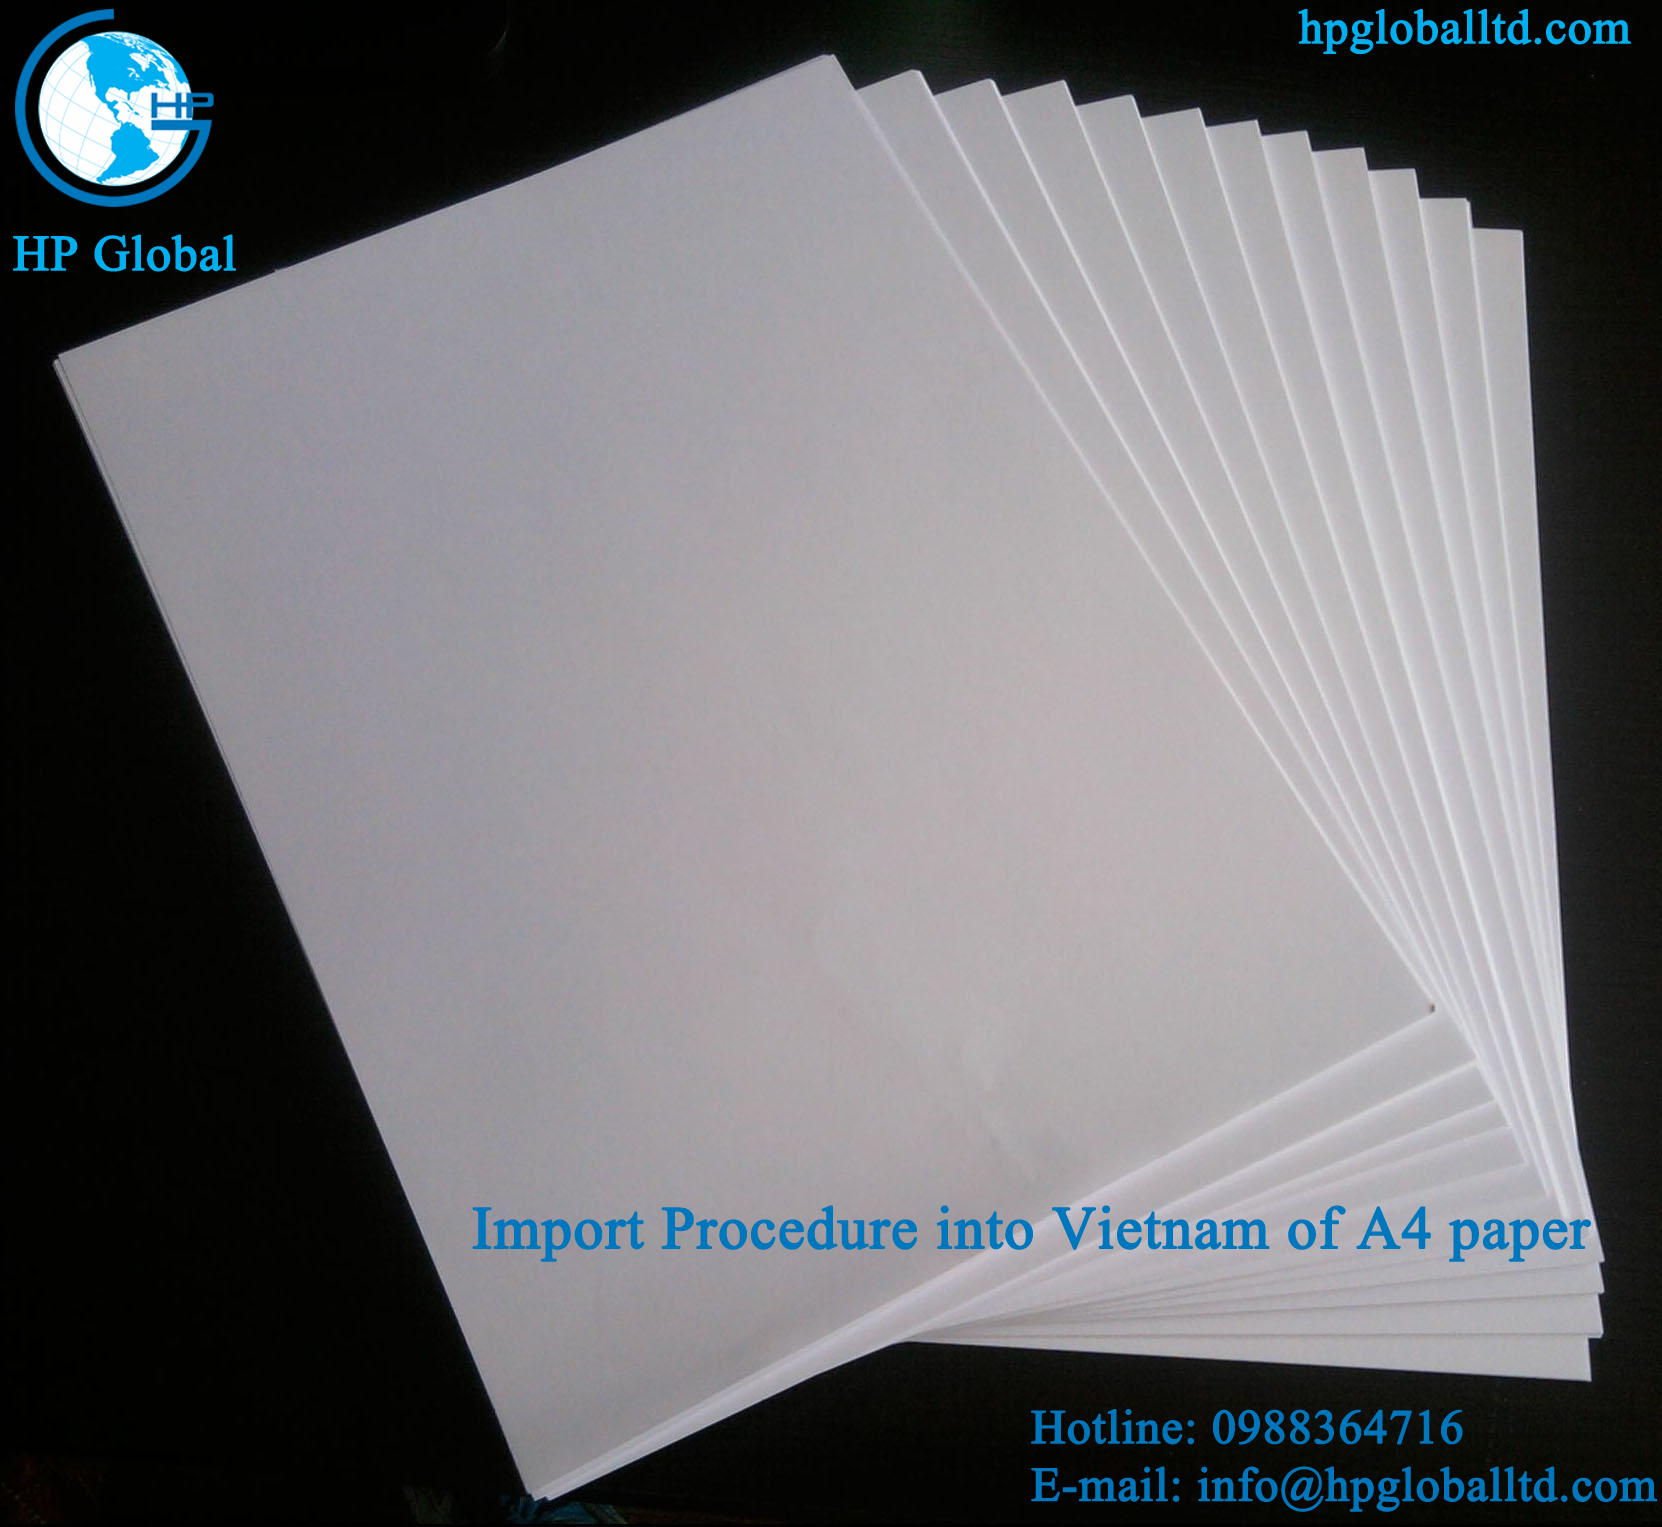 Import Procedure into Vietnam of A4 paper